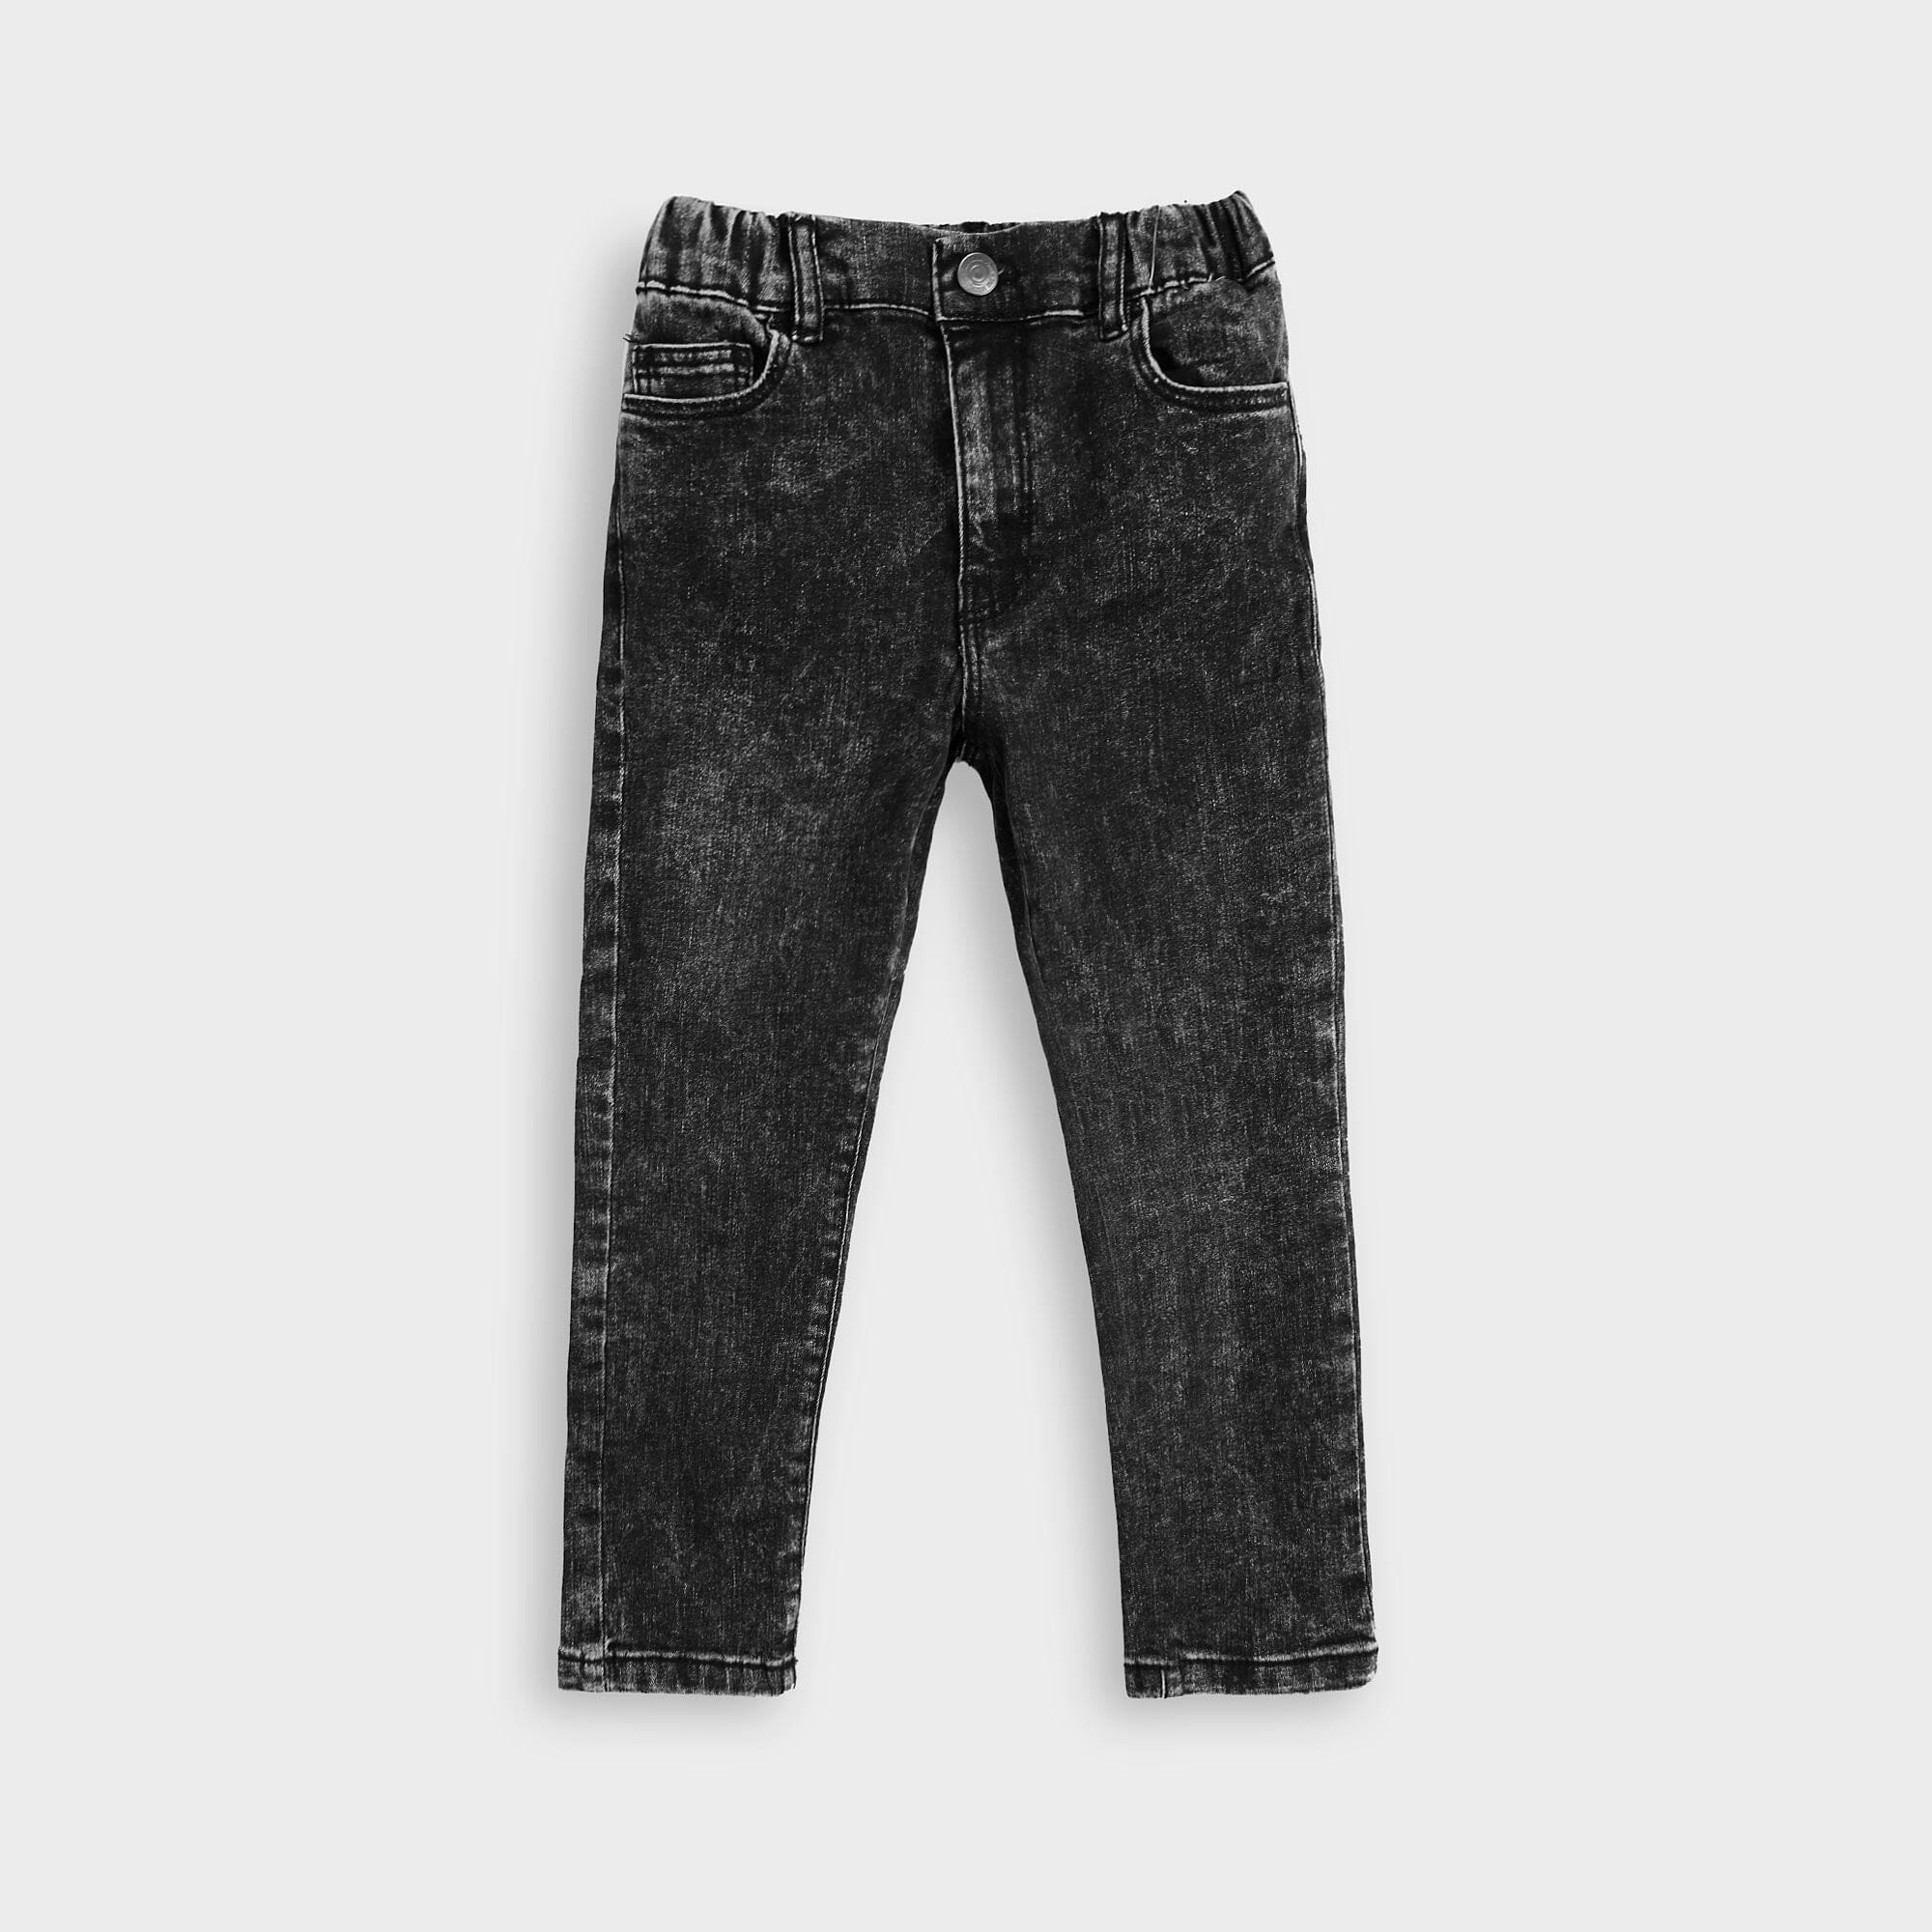 Premium Quality Regular Fit Stretch Denim Jeans For Boys (121060)